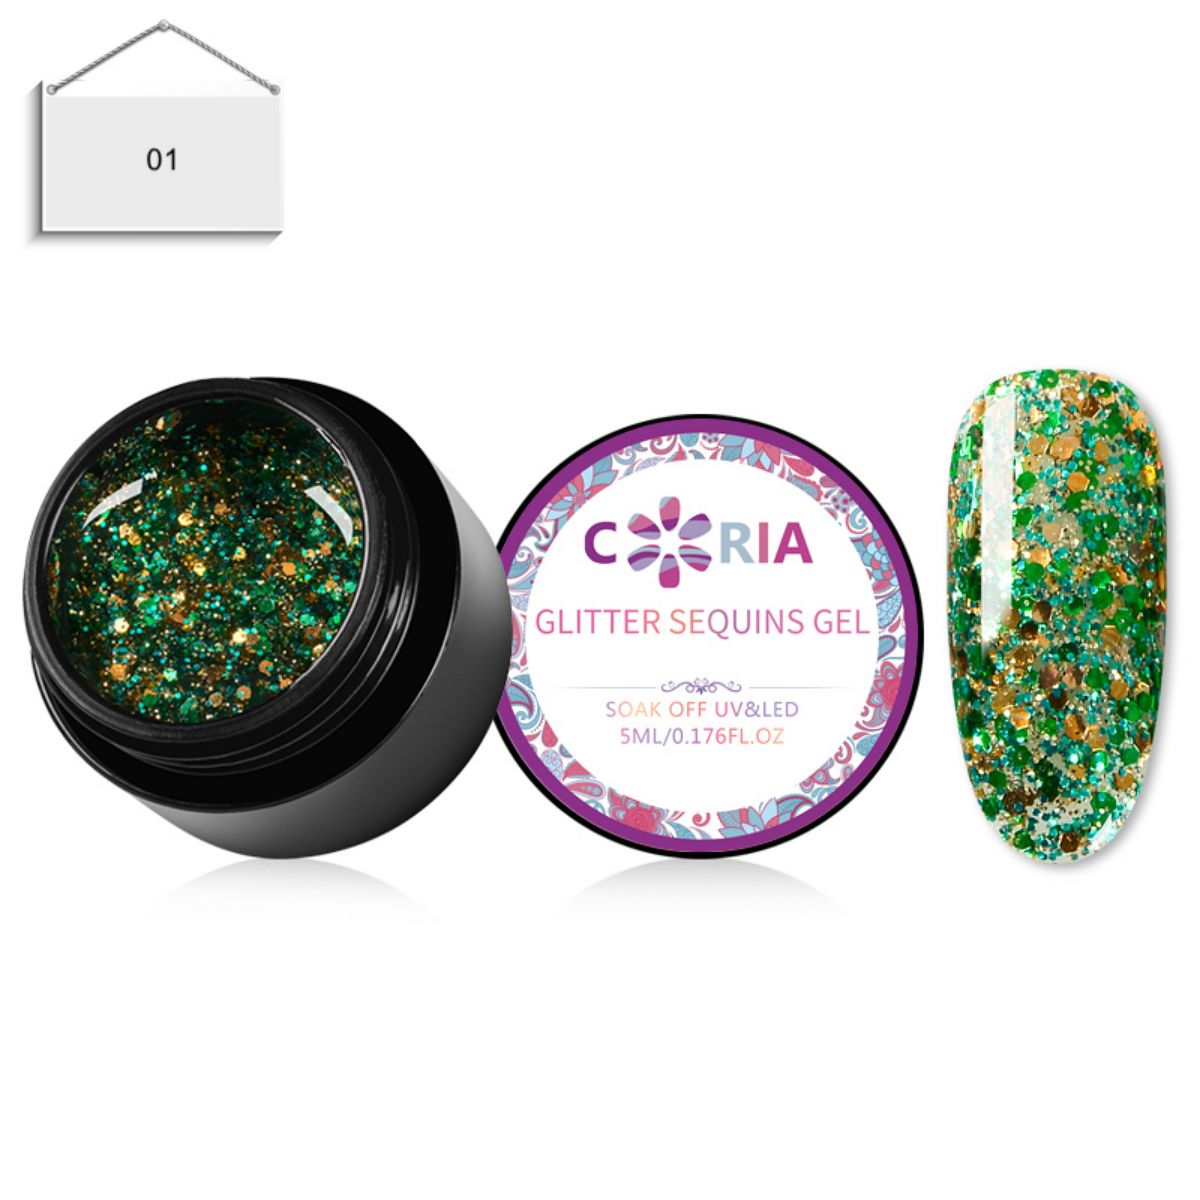 Gel Uv/Led Coria Glitter Sequins 5g 01 - Coria